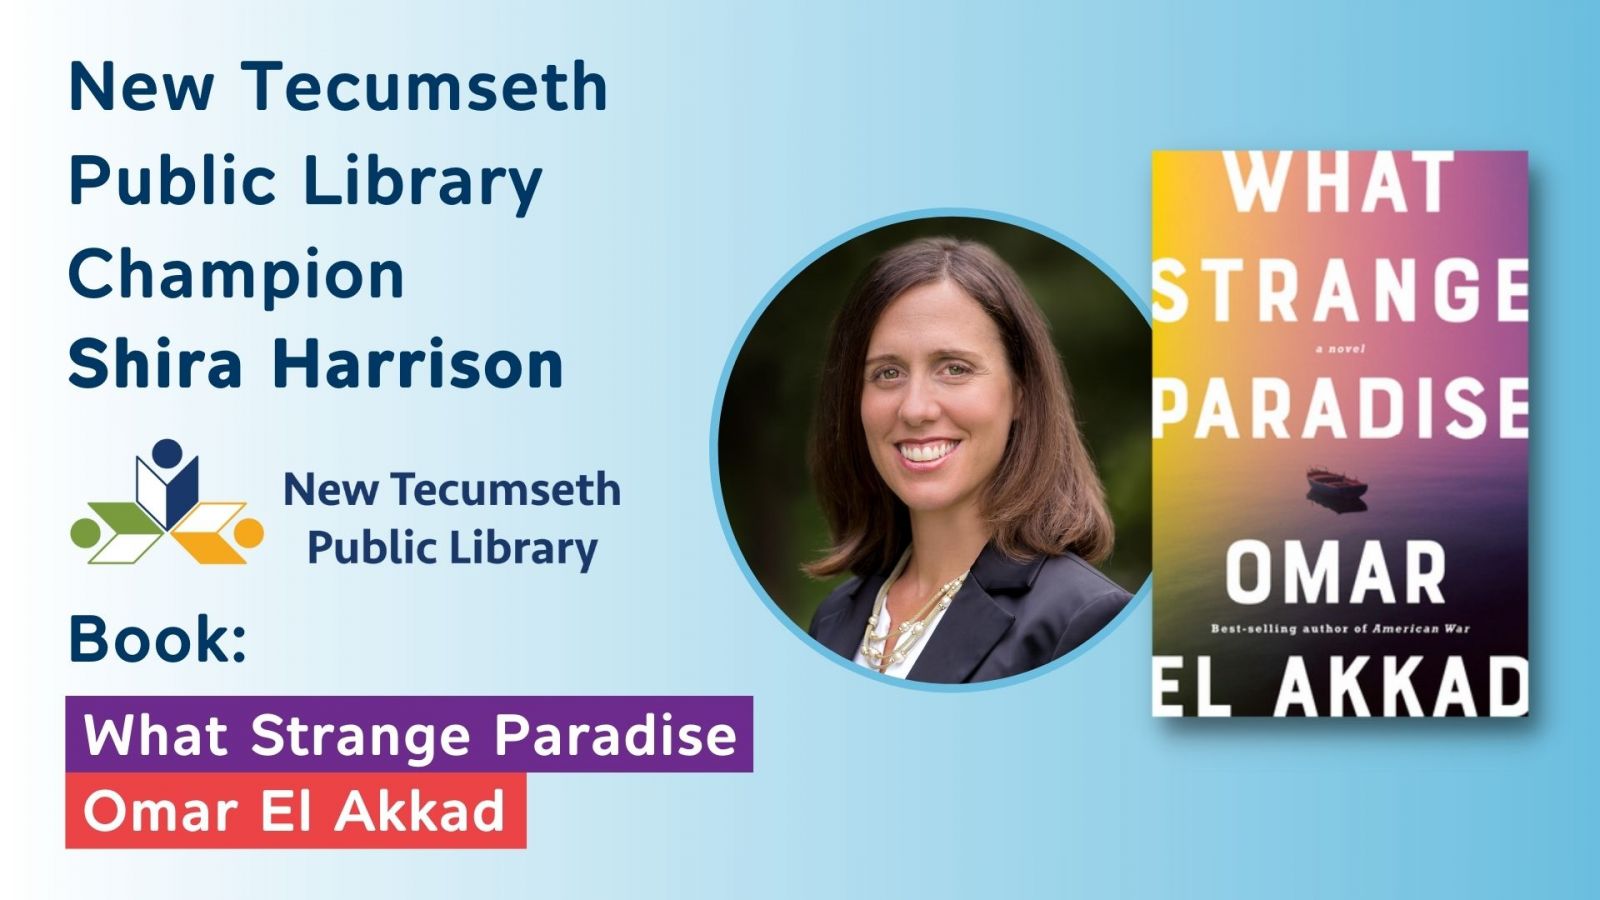 New Tecumseth Public Library Champion: Shira Harrison McIntyre  _New Tecumseth Public Library Book: What Strange Paradise by Omar El Akkad